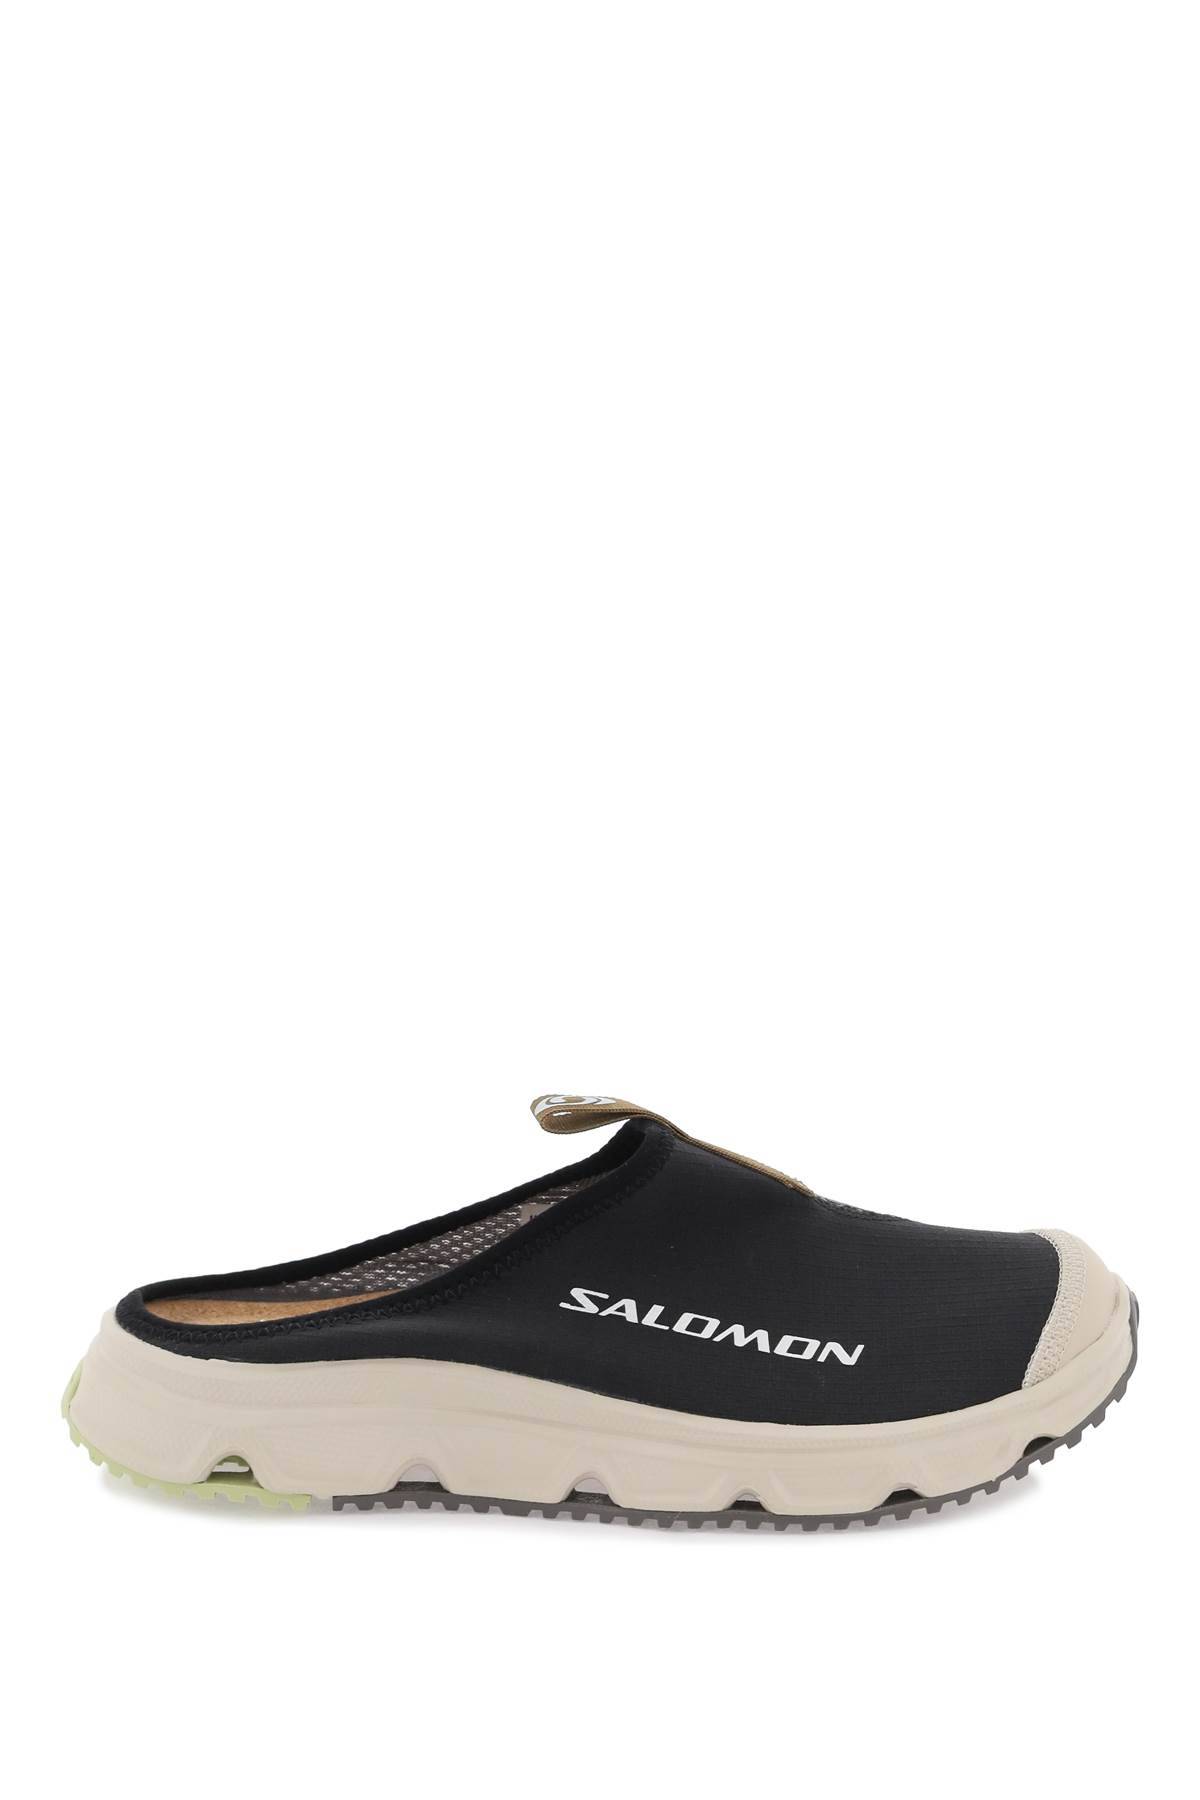 SALOMON SALOMON rx slide 3.0 recovery shoes